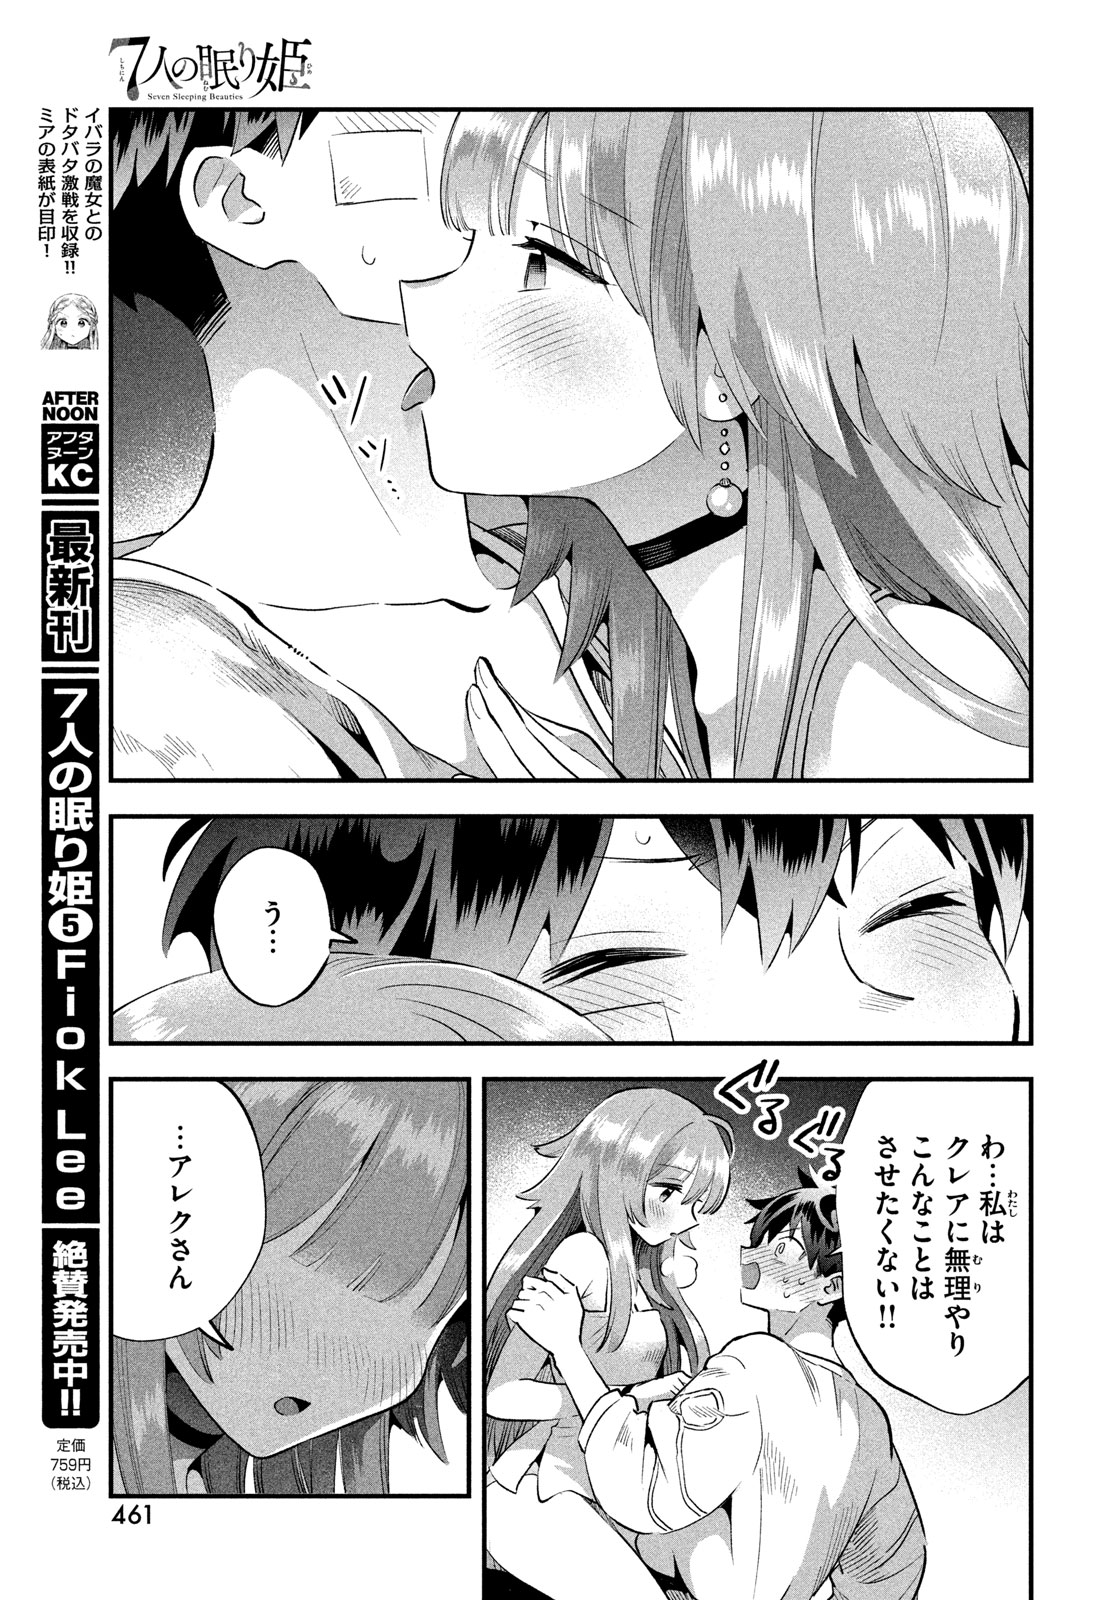 7-nin no Nemuri Hime - Chapter 51 - Page 5